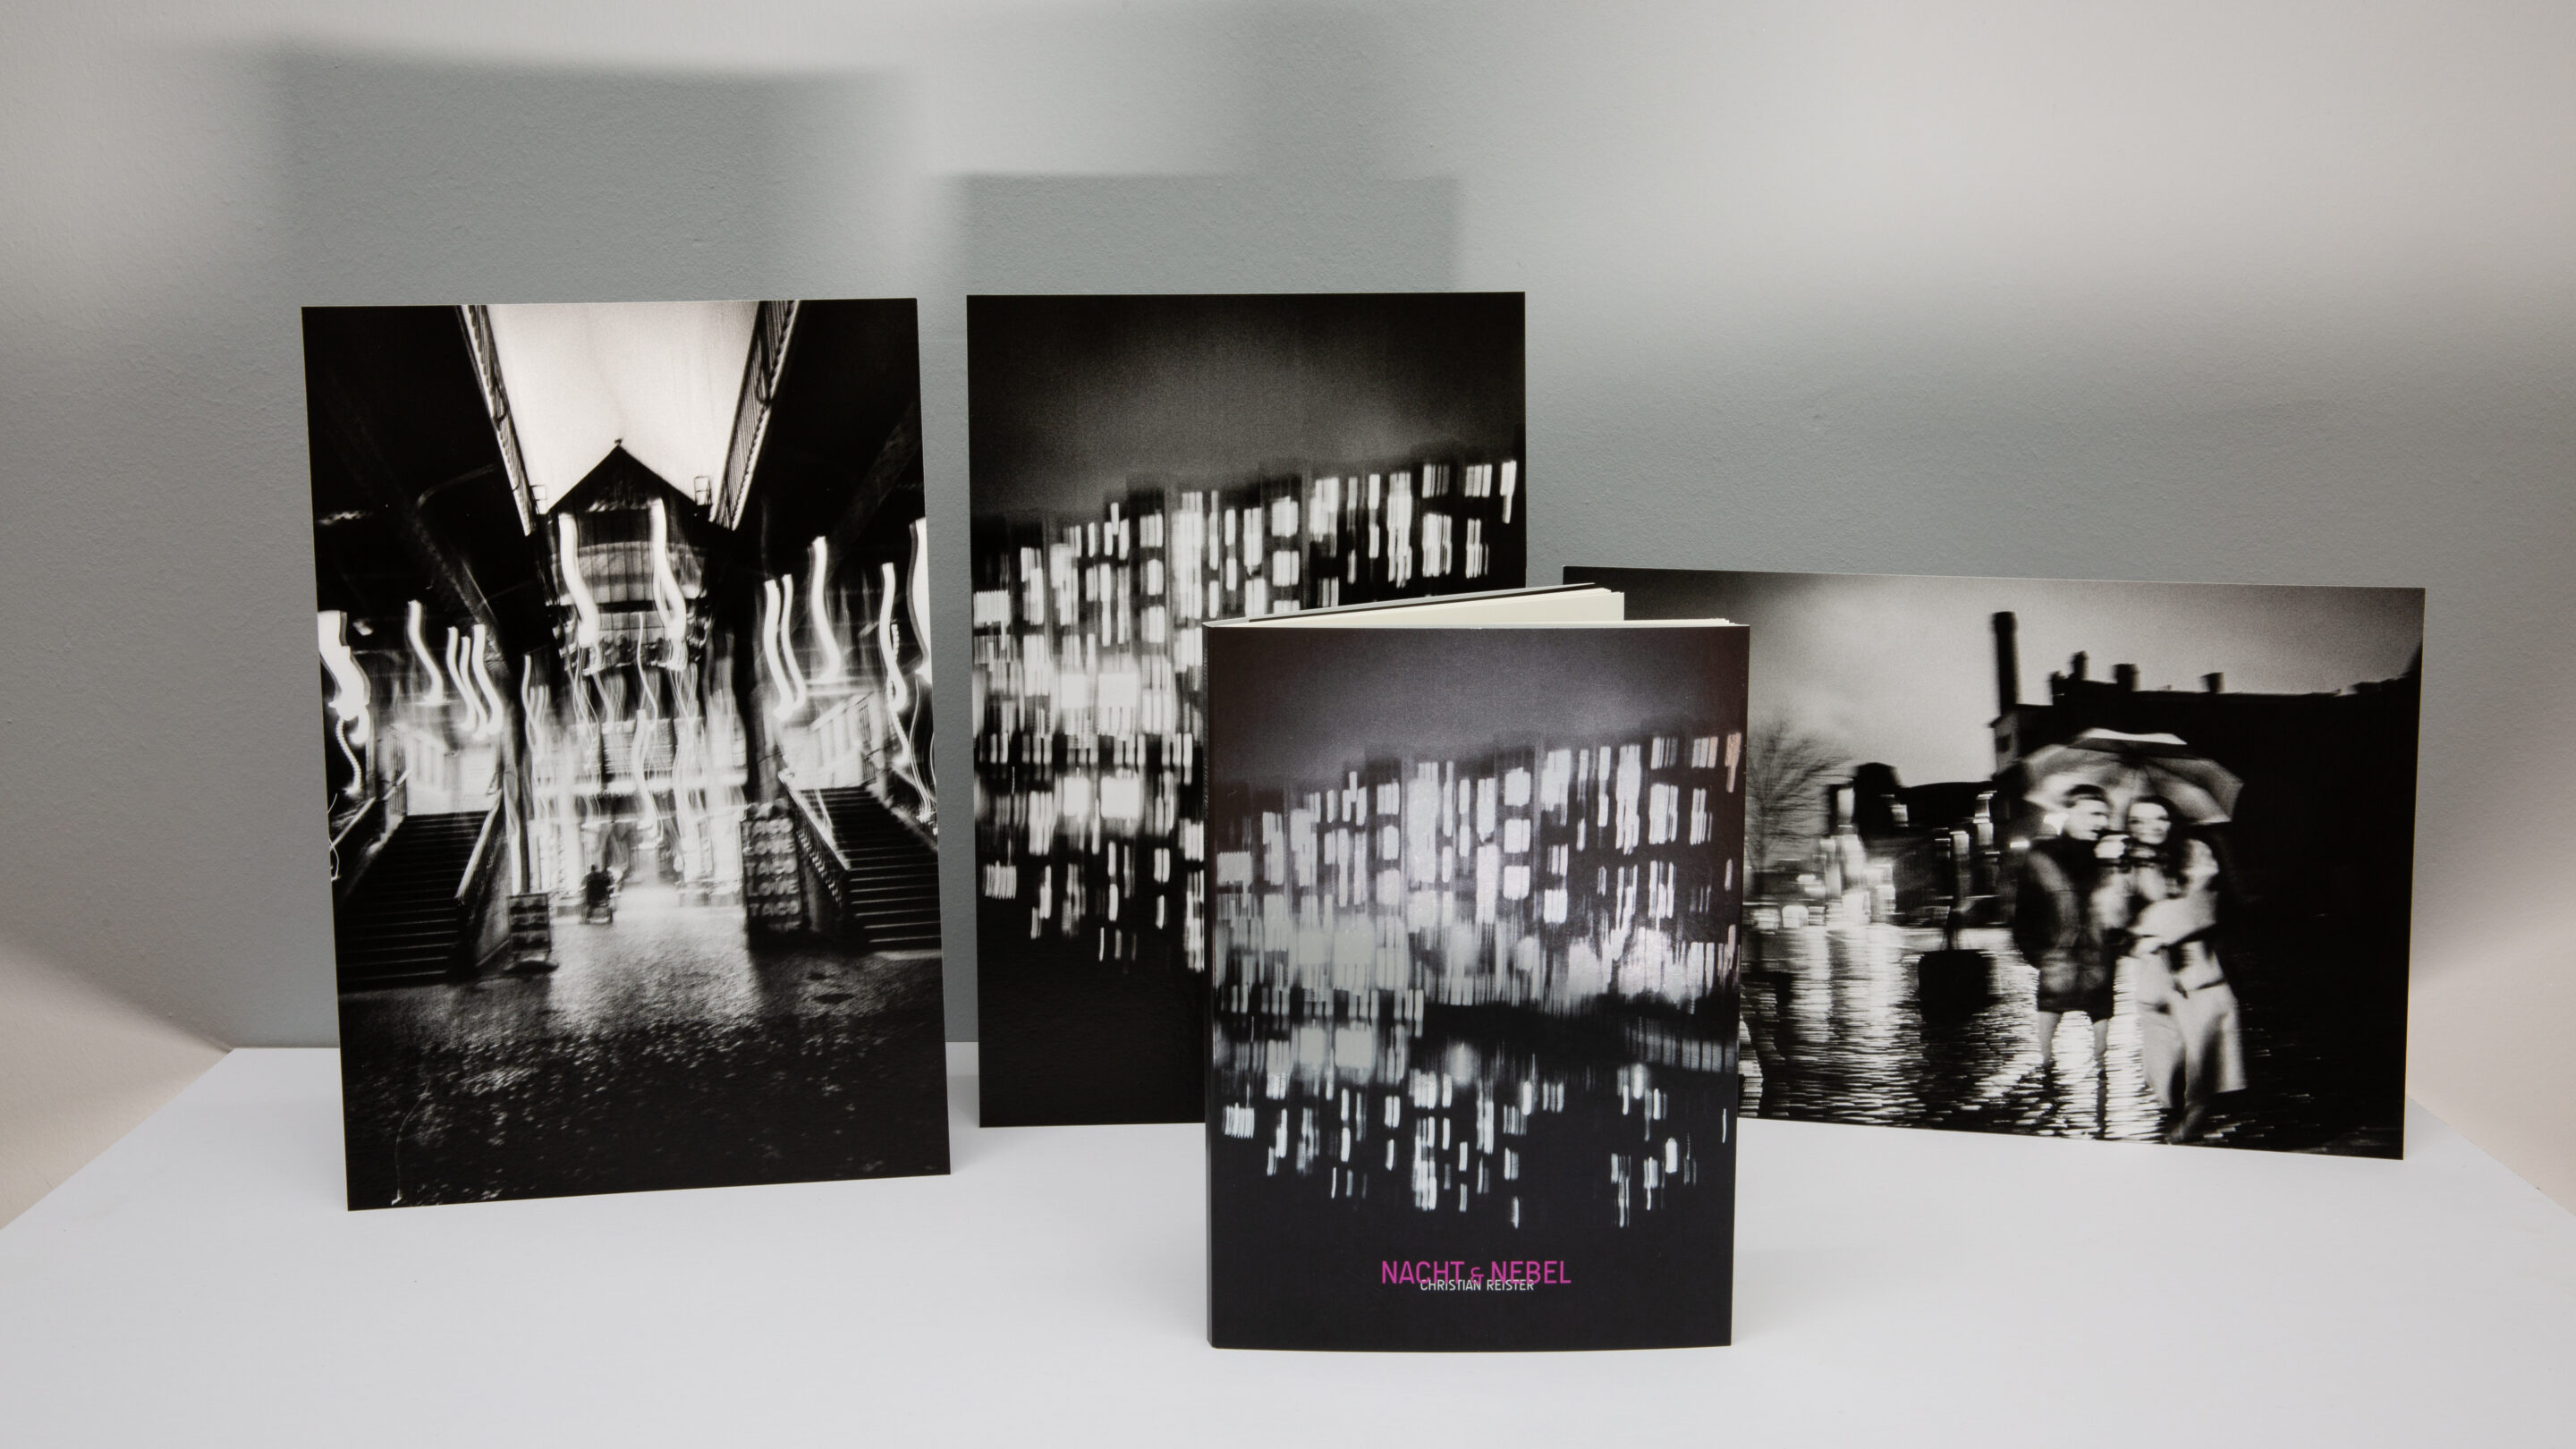 Christian Reister: photobook "Nacht & Nebel", Berlin night photography in Black & White